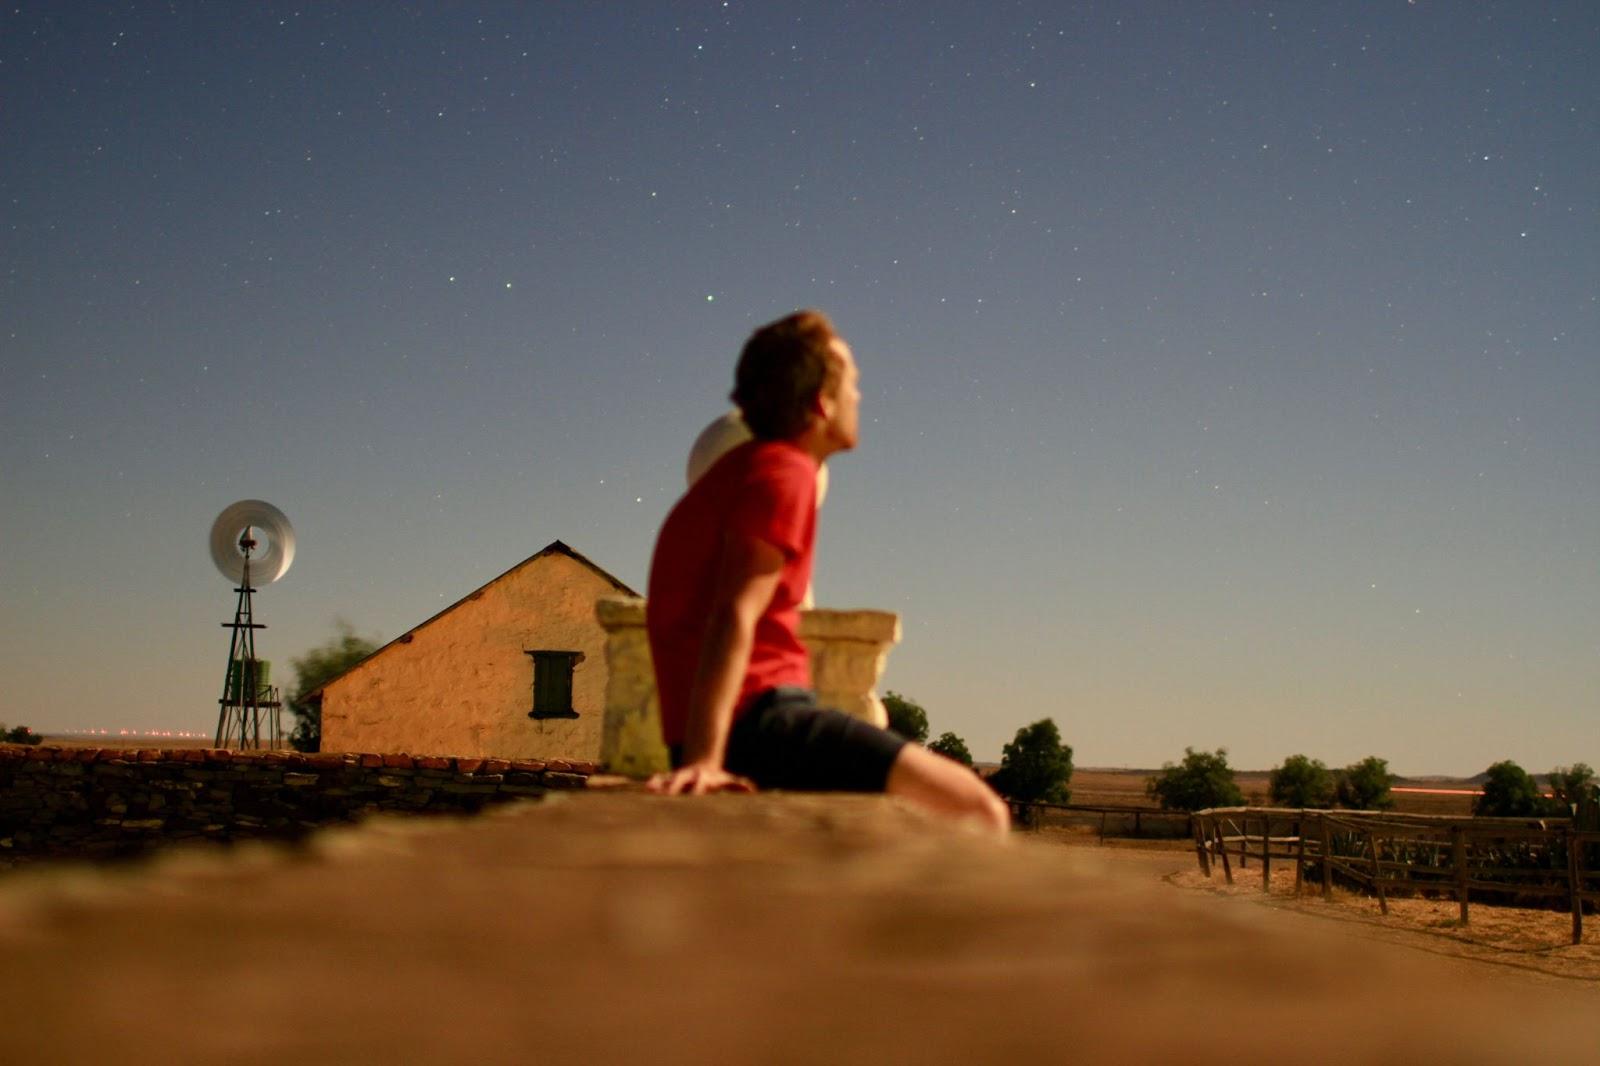 Stargazing enthusiasts enjoy the night sky in the Karoo